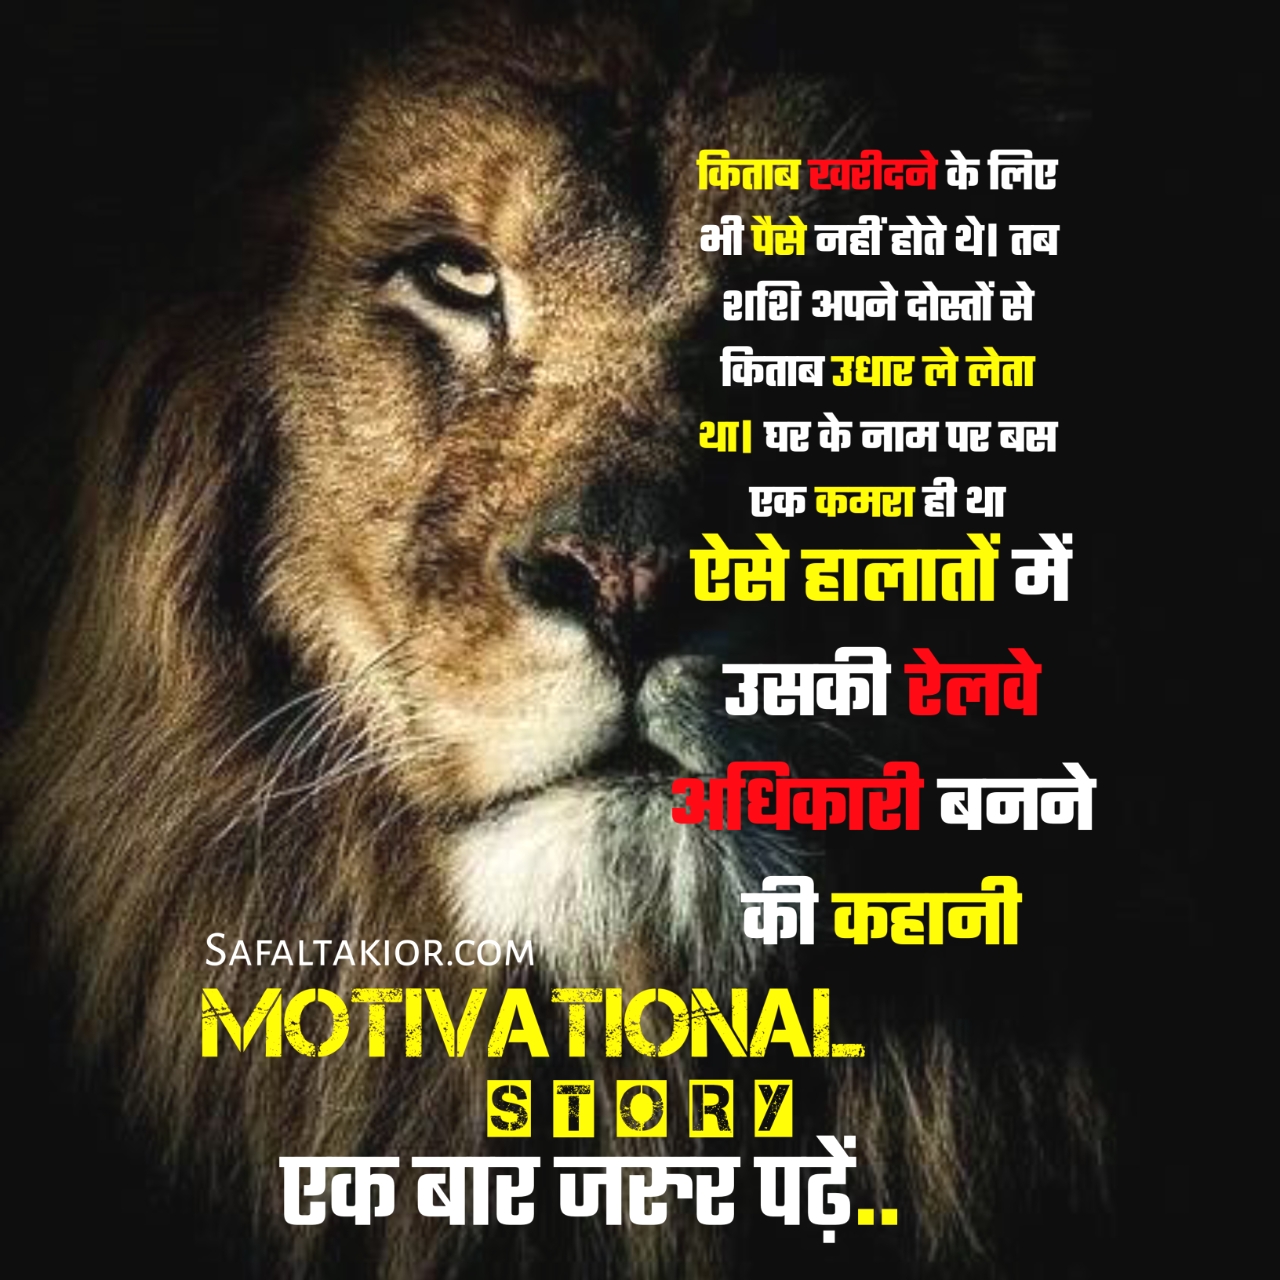 Motivation &Inspiration story hindi विद्यार्थी के लिए प्रेरणादायक कहानी मोटिवेशन स्टोरी